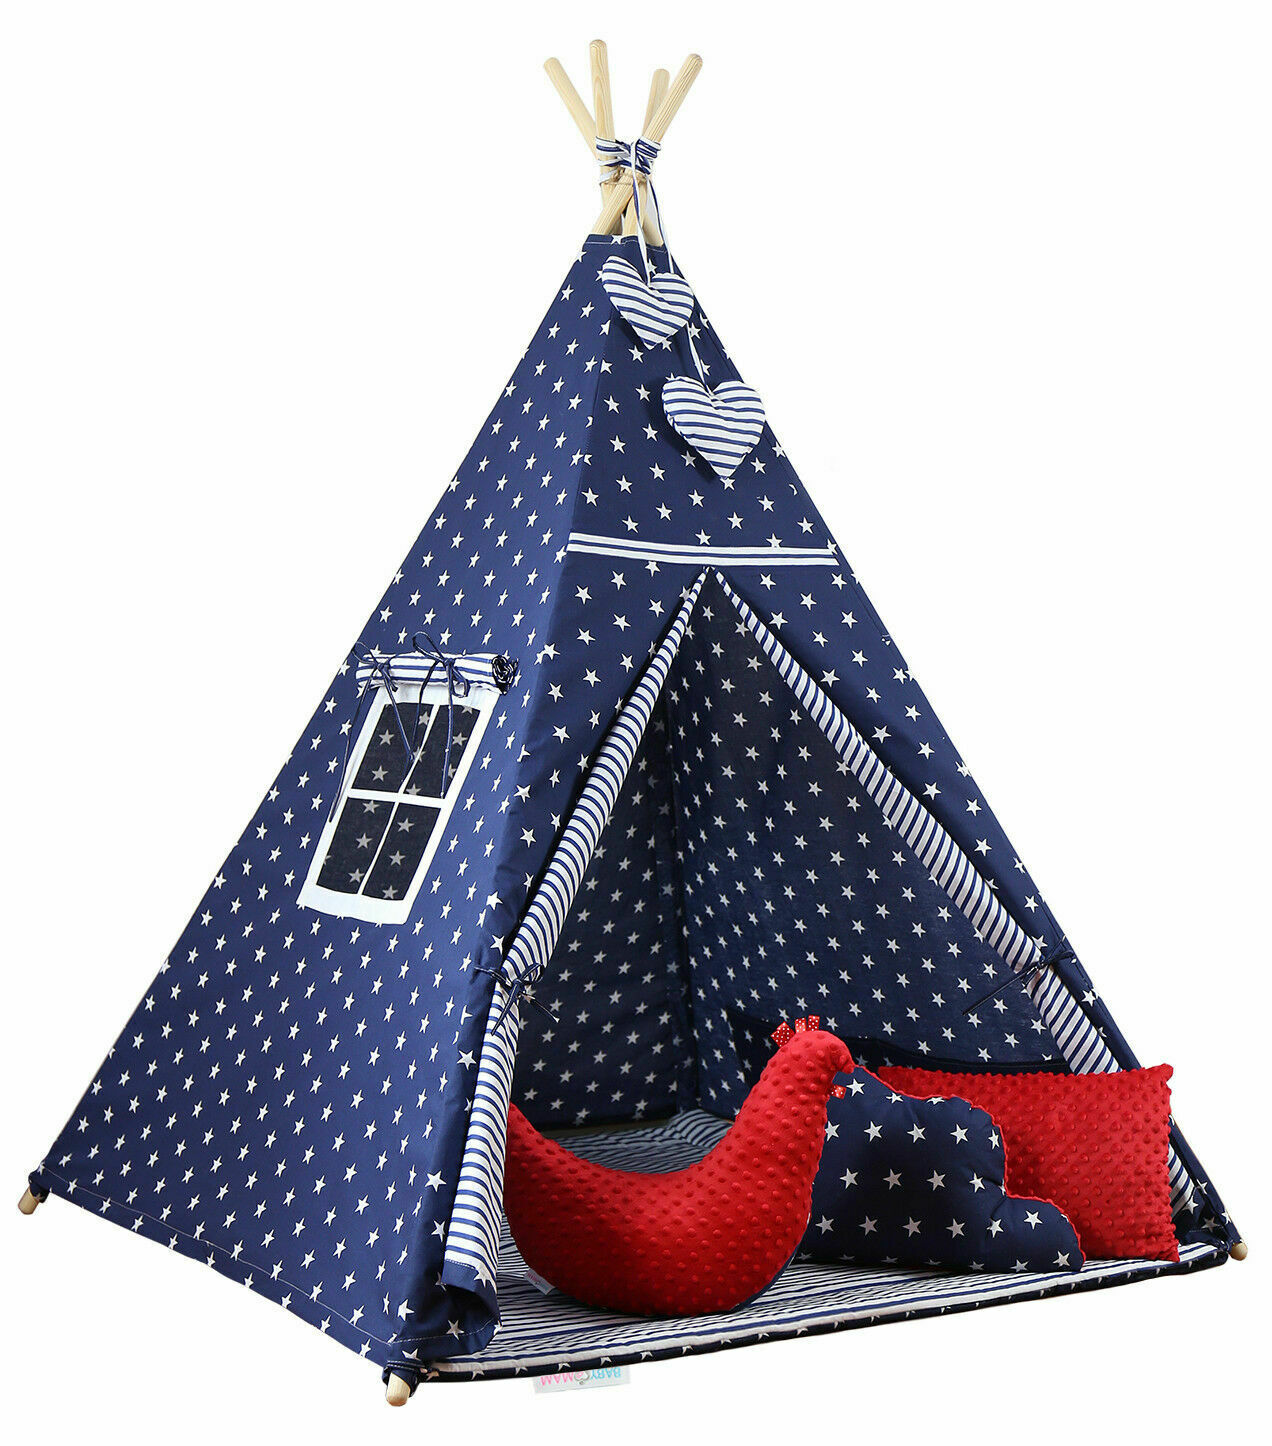 SMALL TEEPEE WIGWAM Indoor Outdoor Kids Cotton Playhouse Tent Night Sky